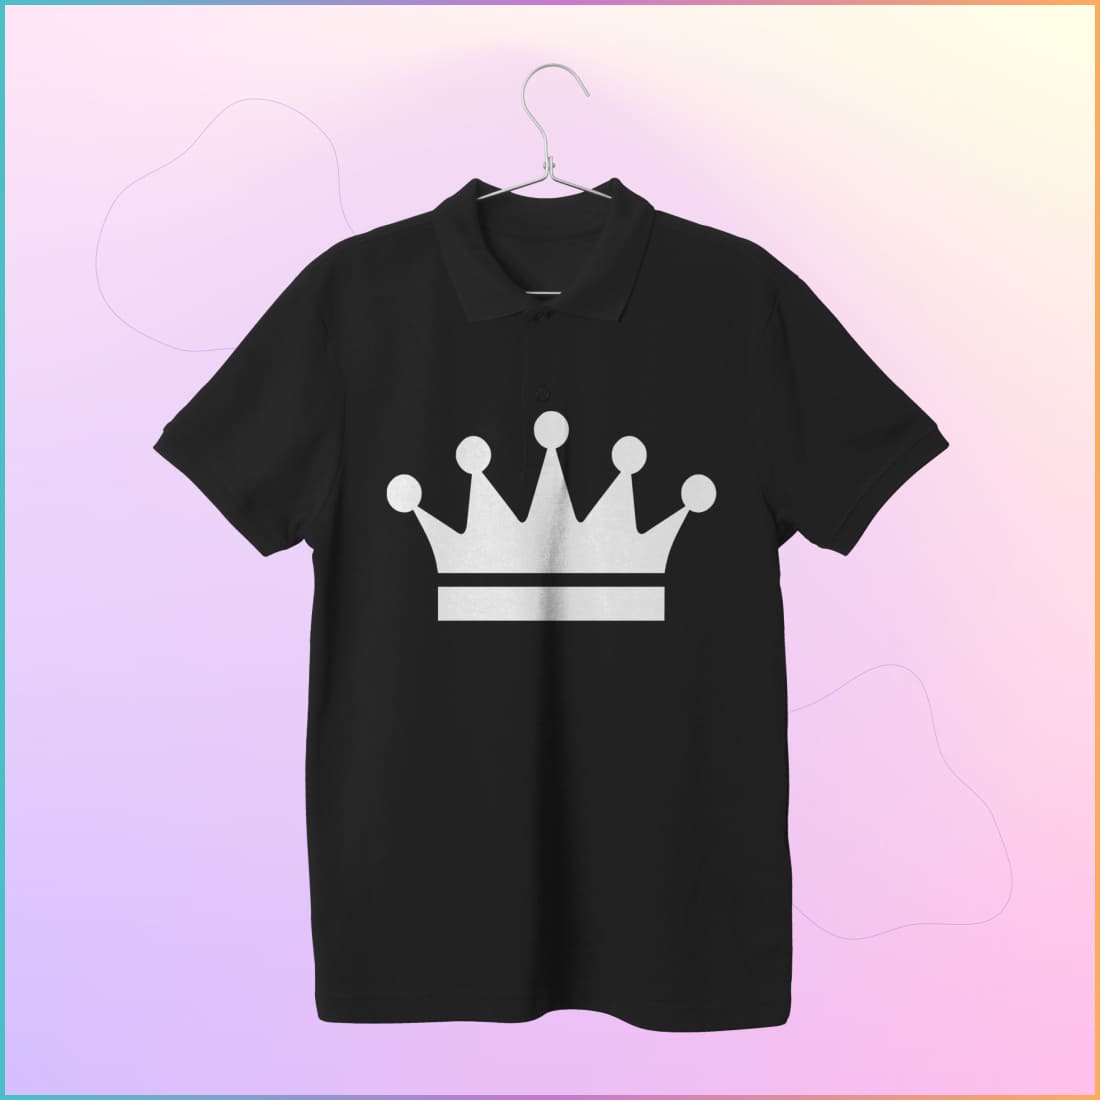 Person Princess Tale Ancient t-shirt preview.